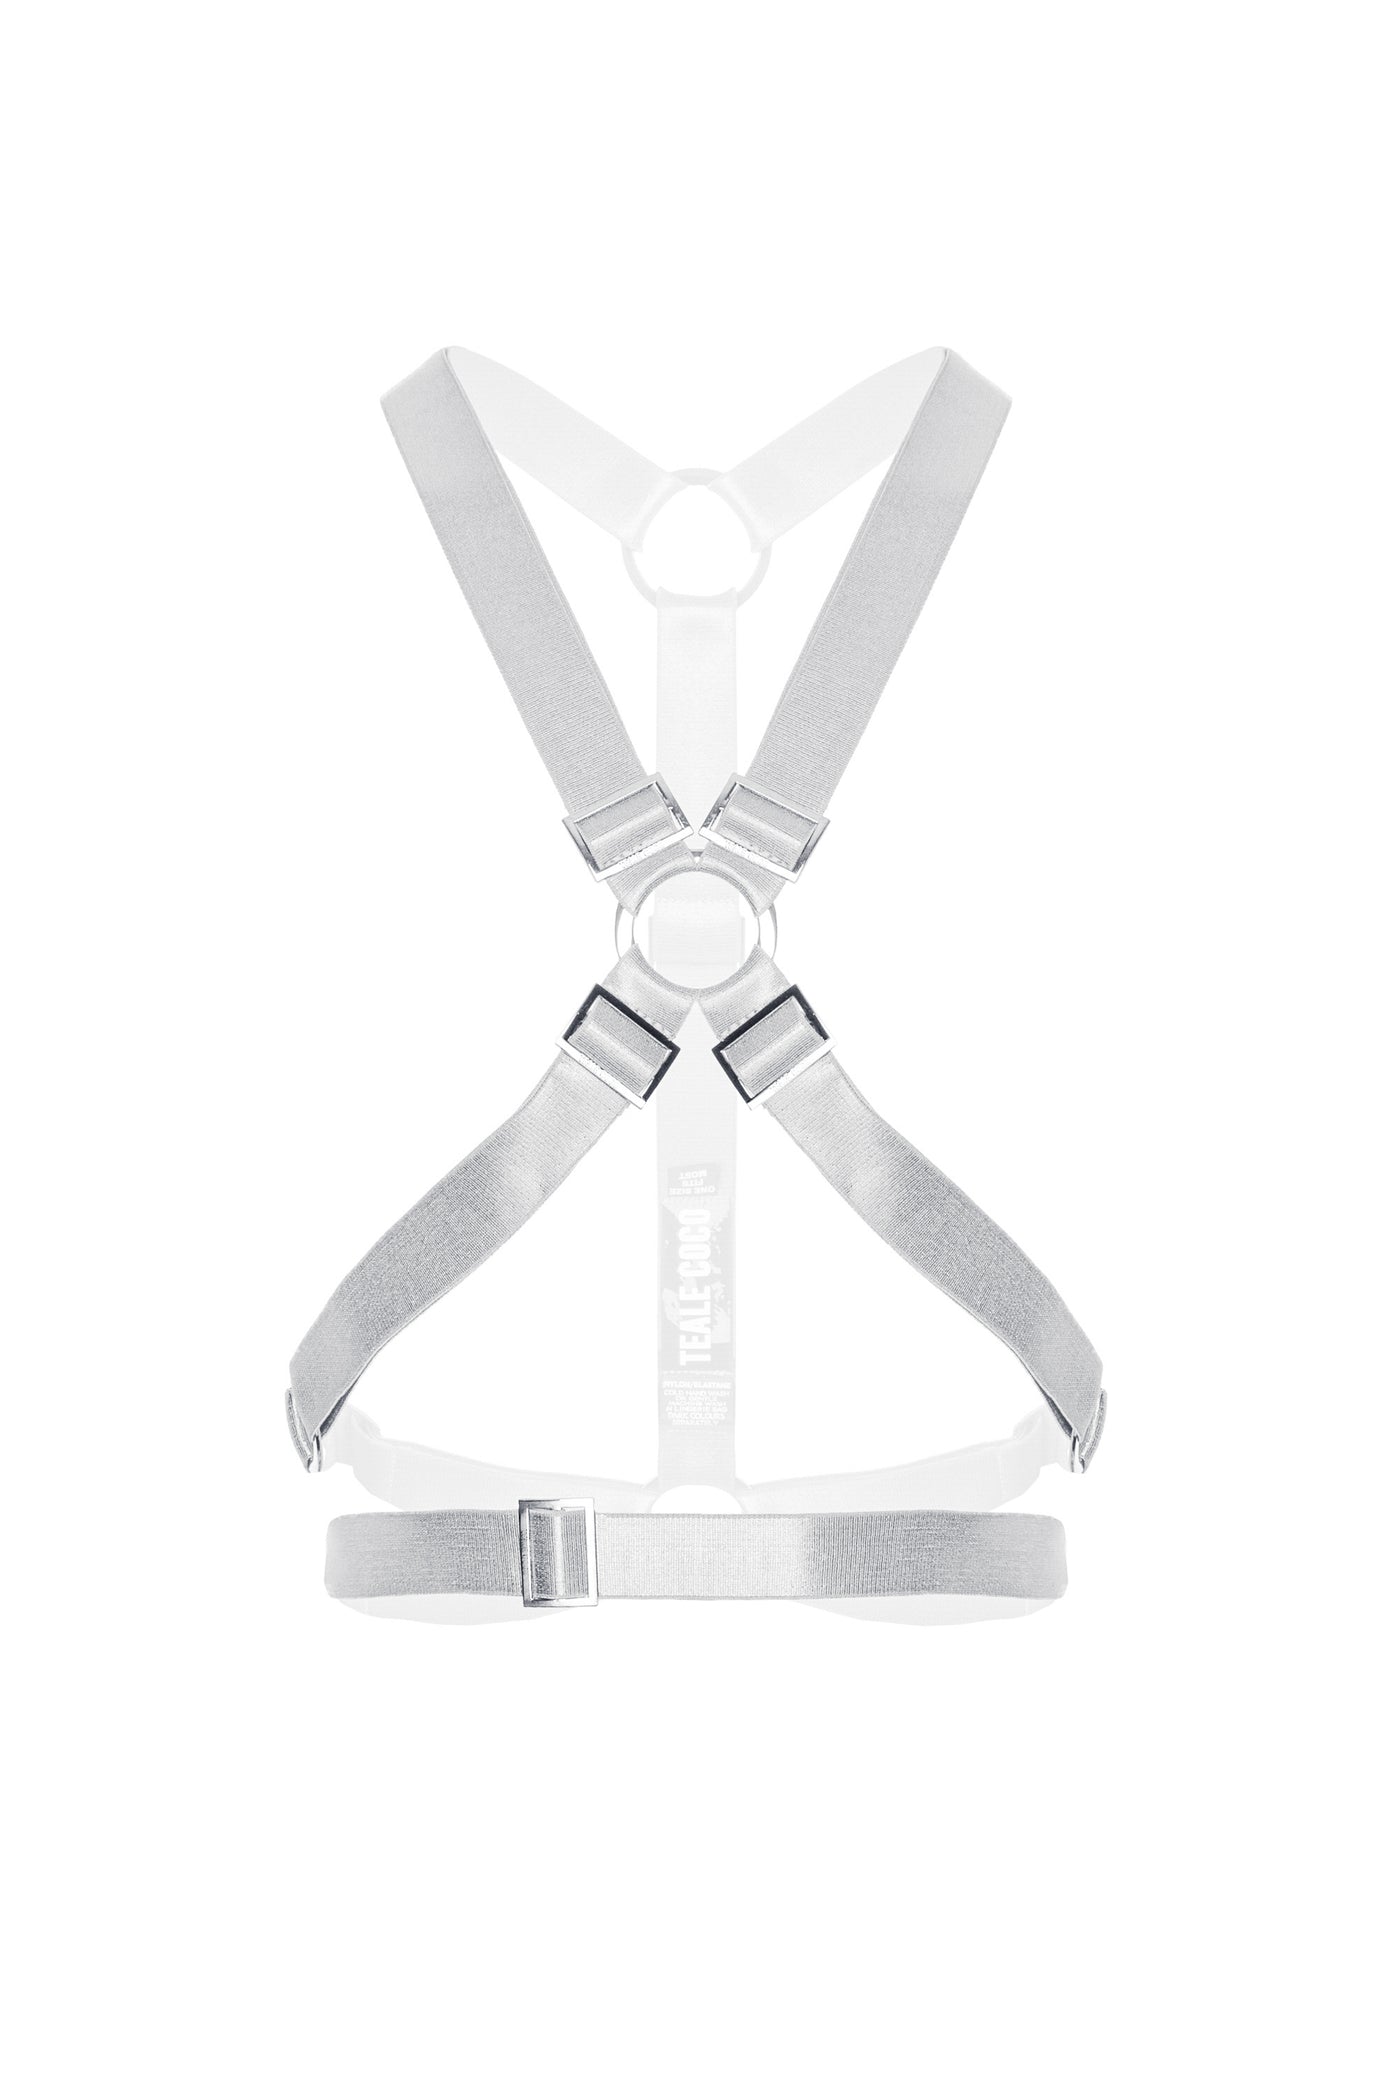 X Crop Harness - (White)